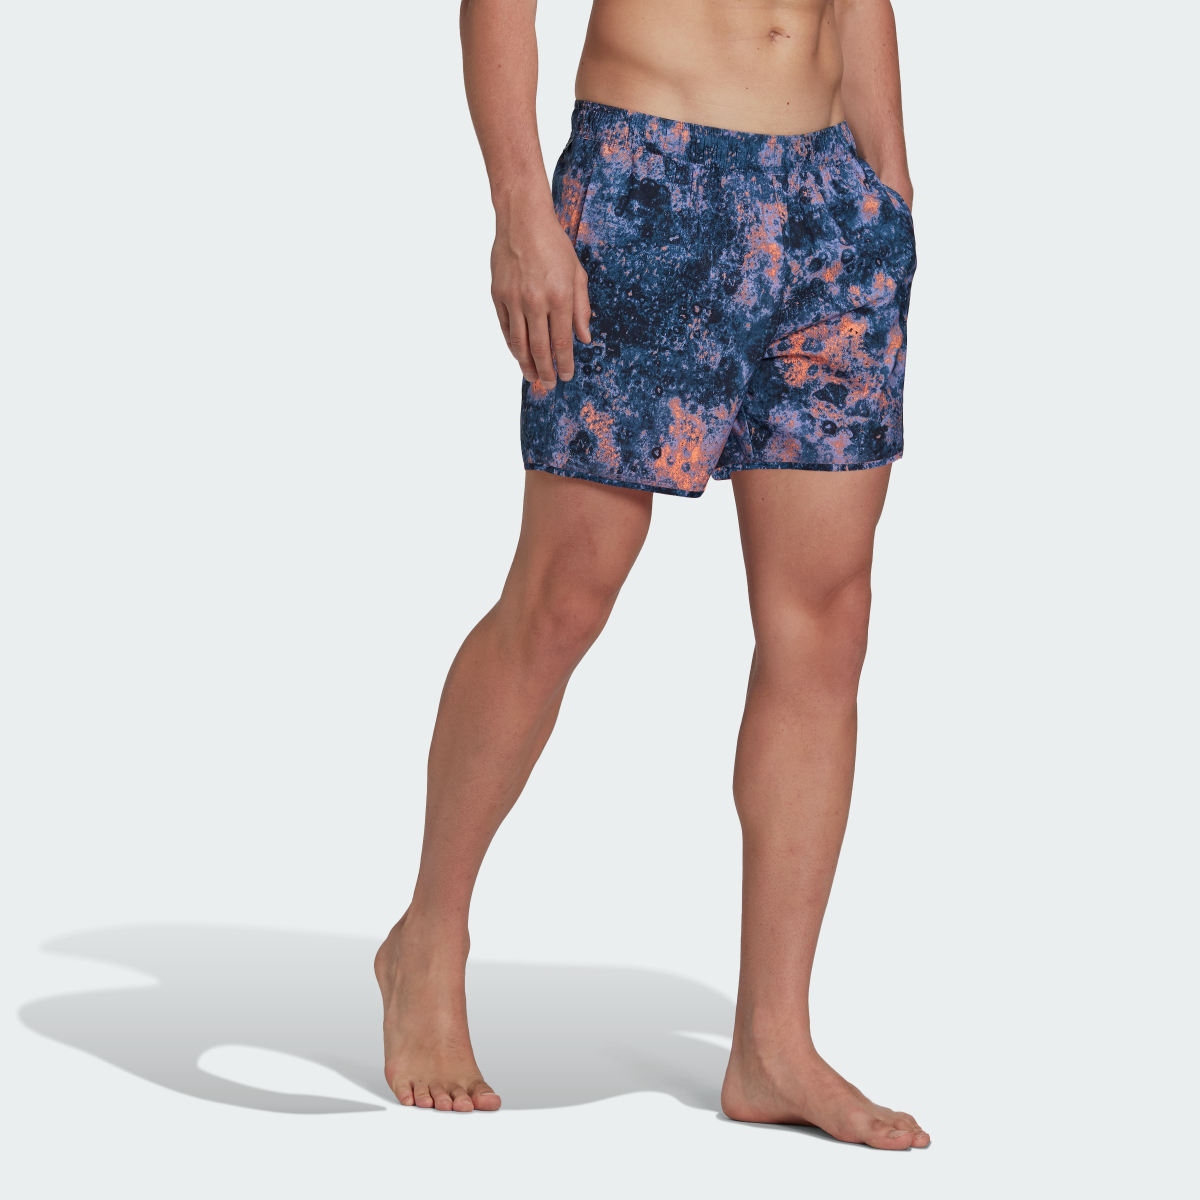 Adidas Short Length Melting Salt Reversible CLX Swim Shorts. 4